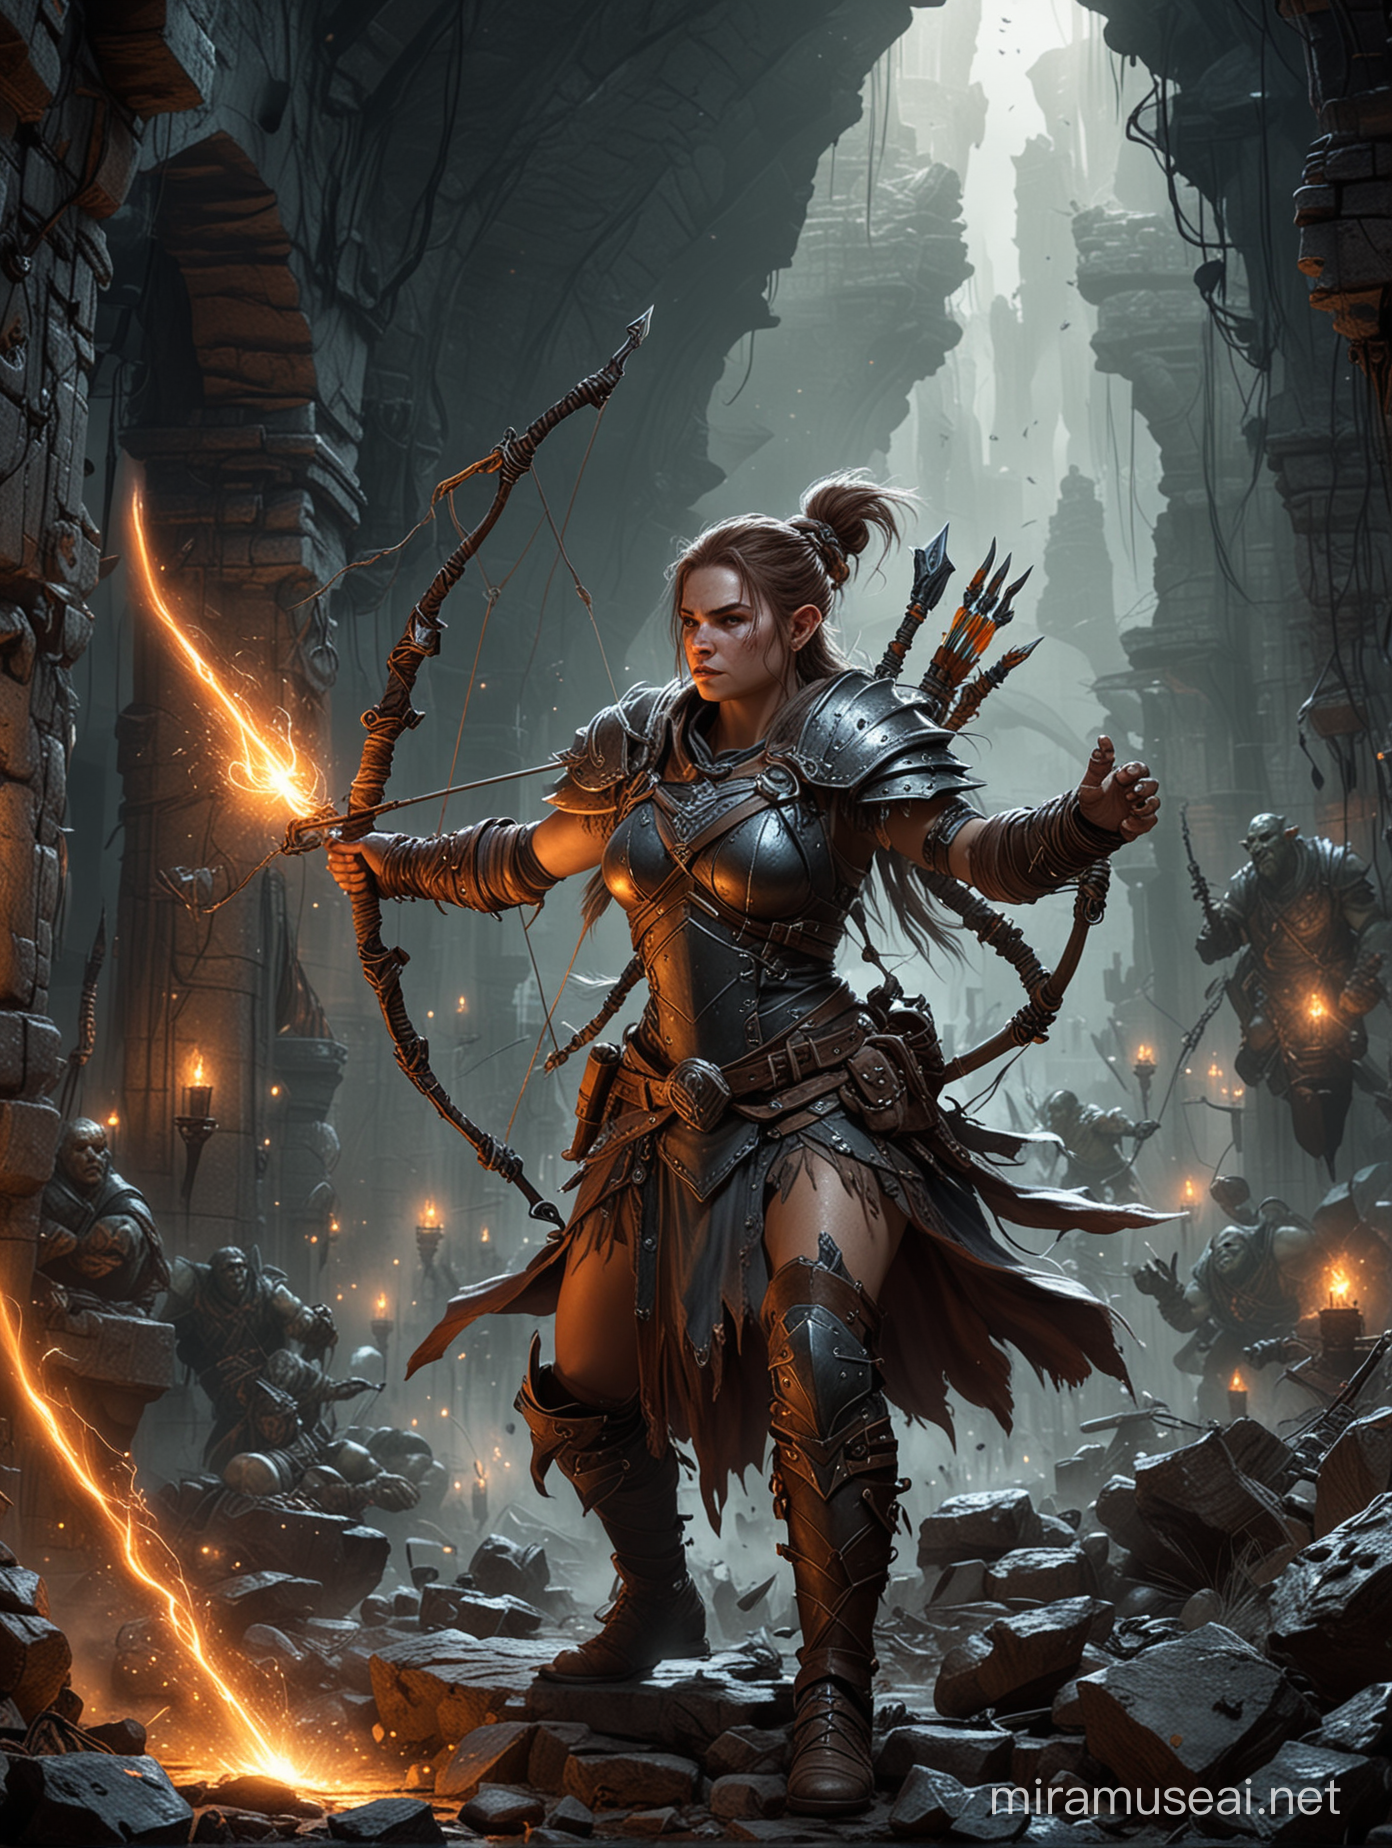 Powerful Female Dwarf Arcane Archer Battling Orcs in Ruined Underground City